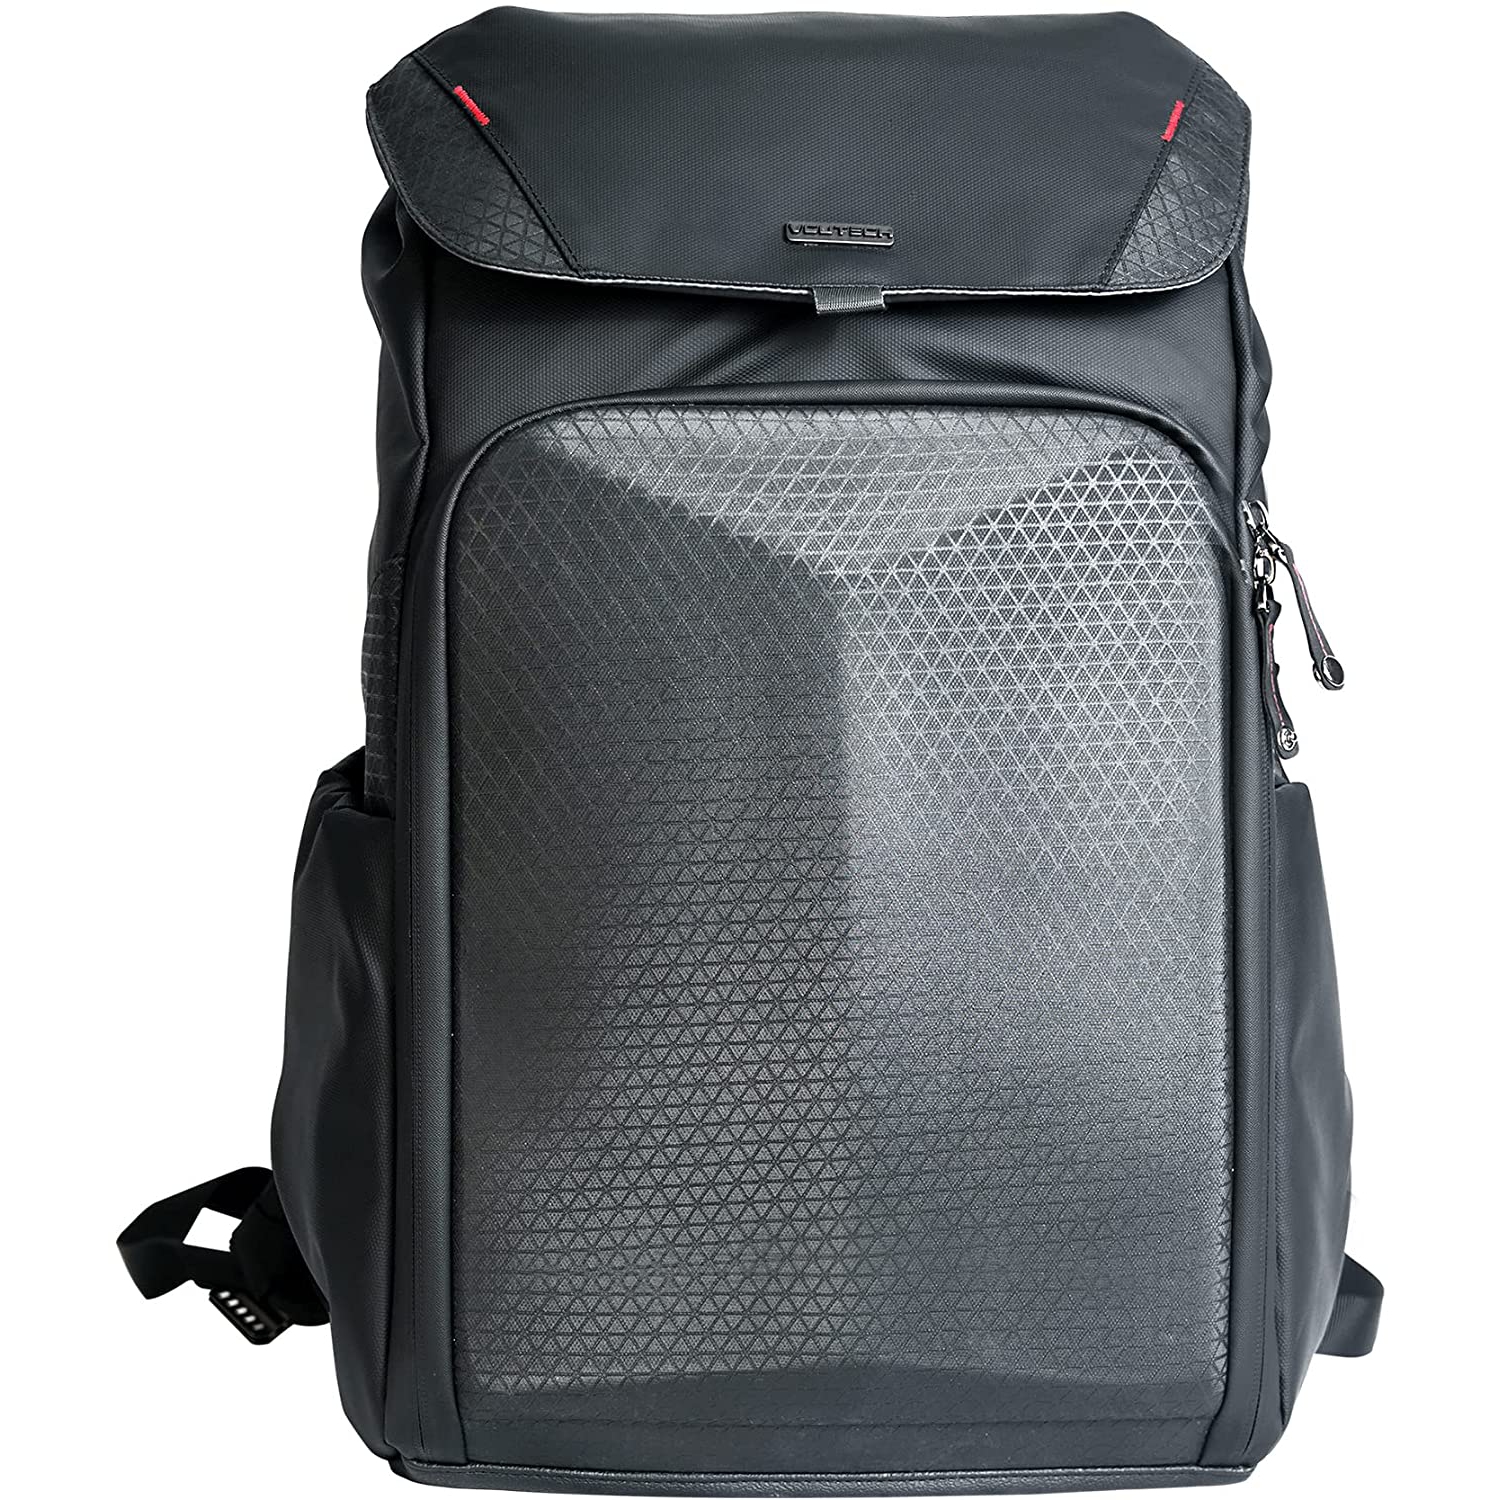 VCUTECH Mavic 3 Drone Water Resistant Backpack Compatible with DJI Mavic 3, Mavic 3 Fly More Combo, Mavic 3 Cine, Mavic 3 Accessories (Backpack)